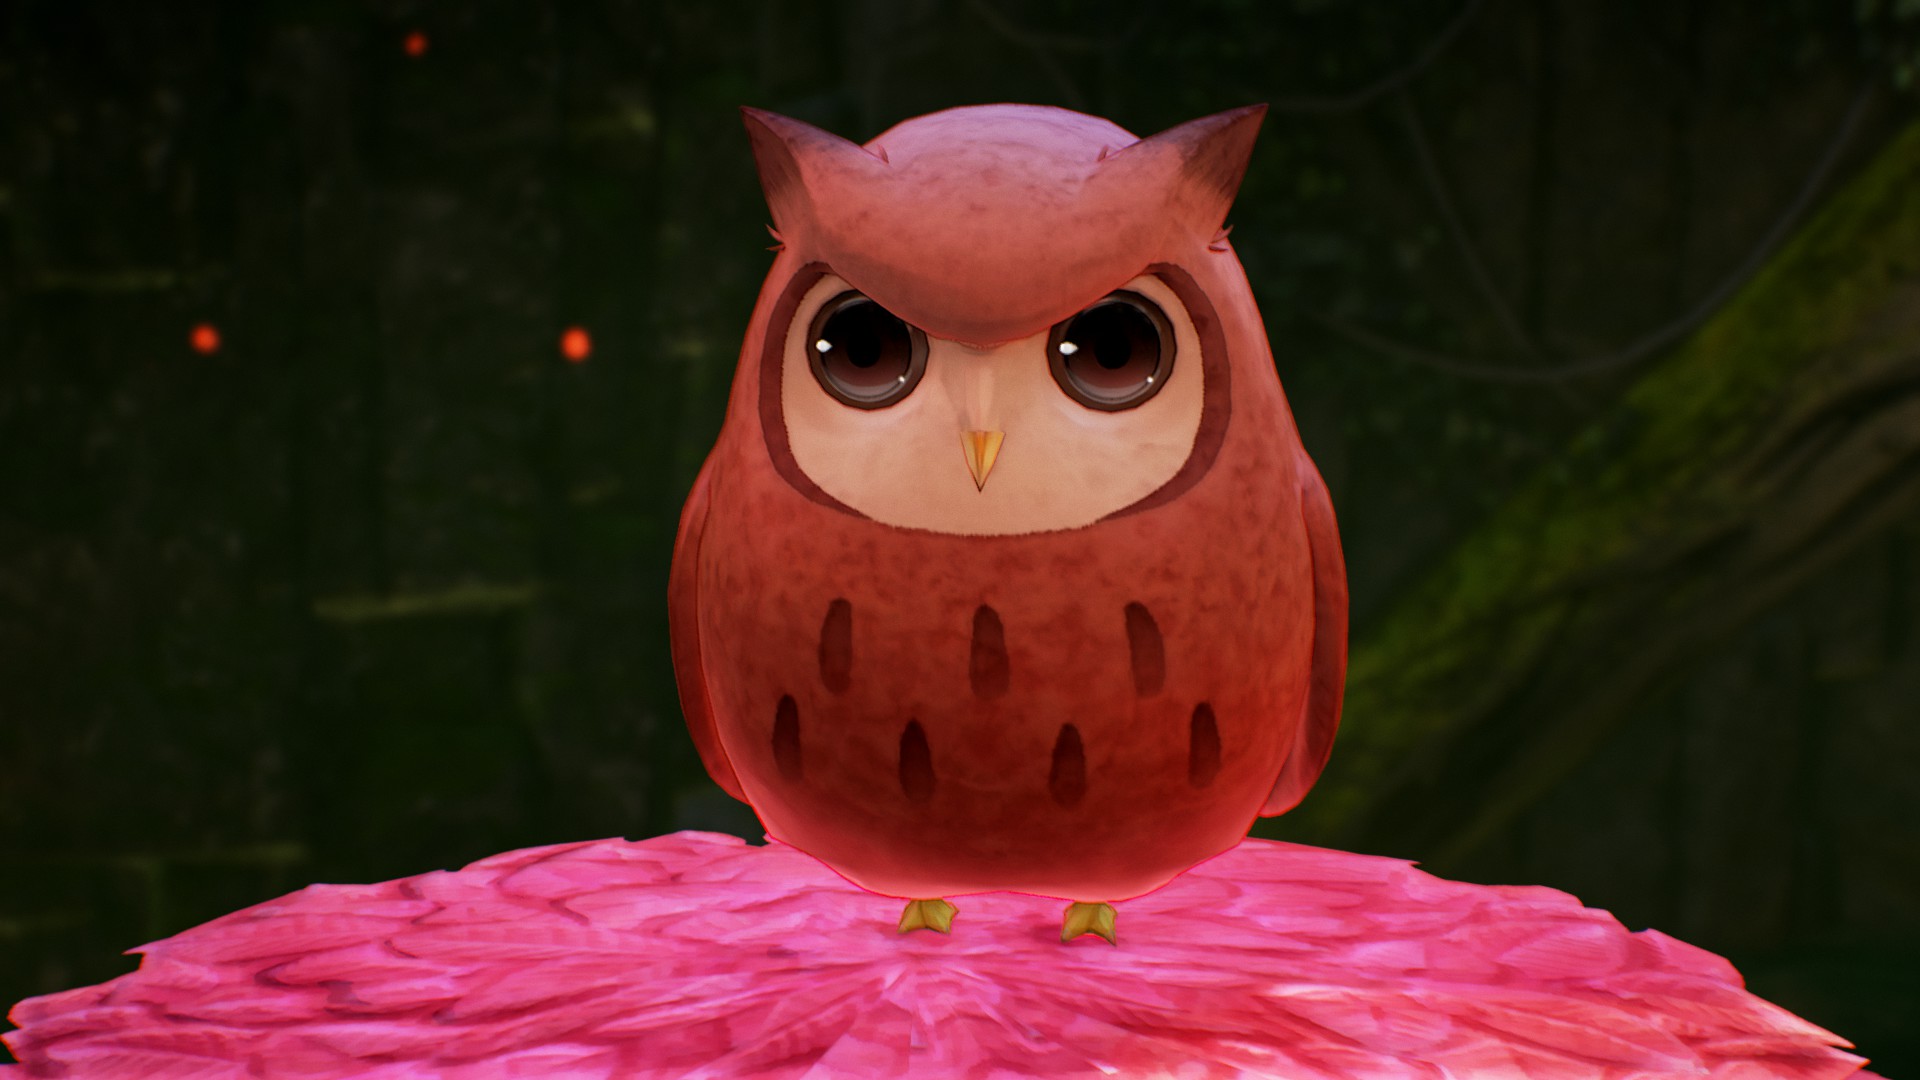 General 1920x1080 Tales of Arise owl video game art digital art video games